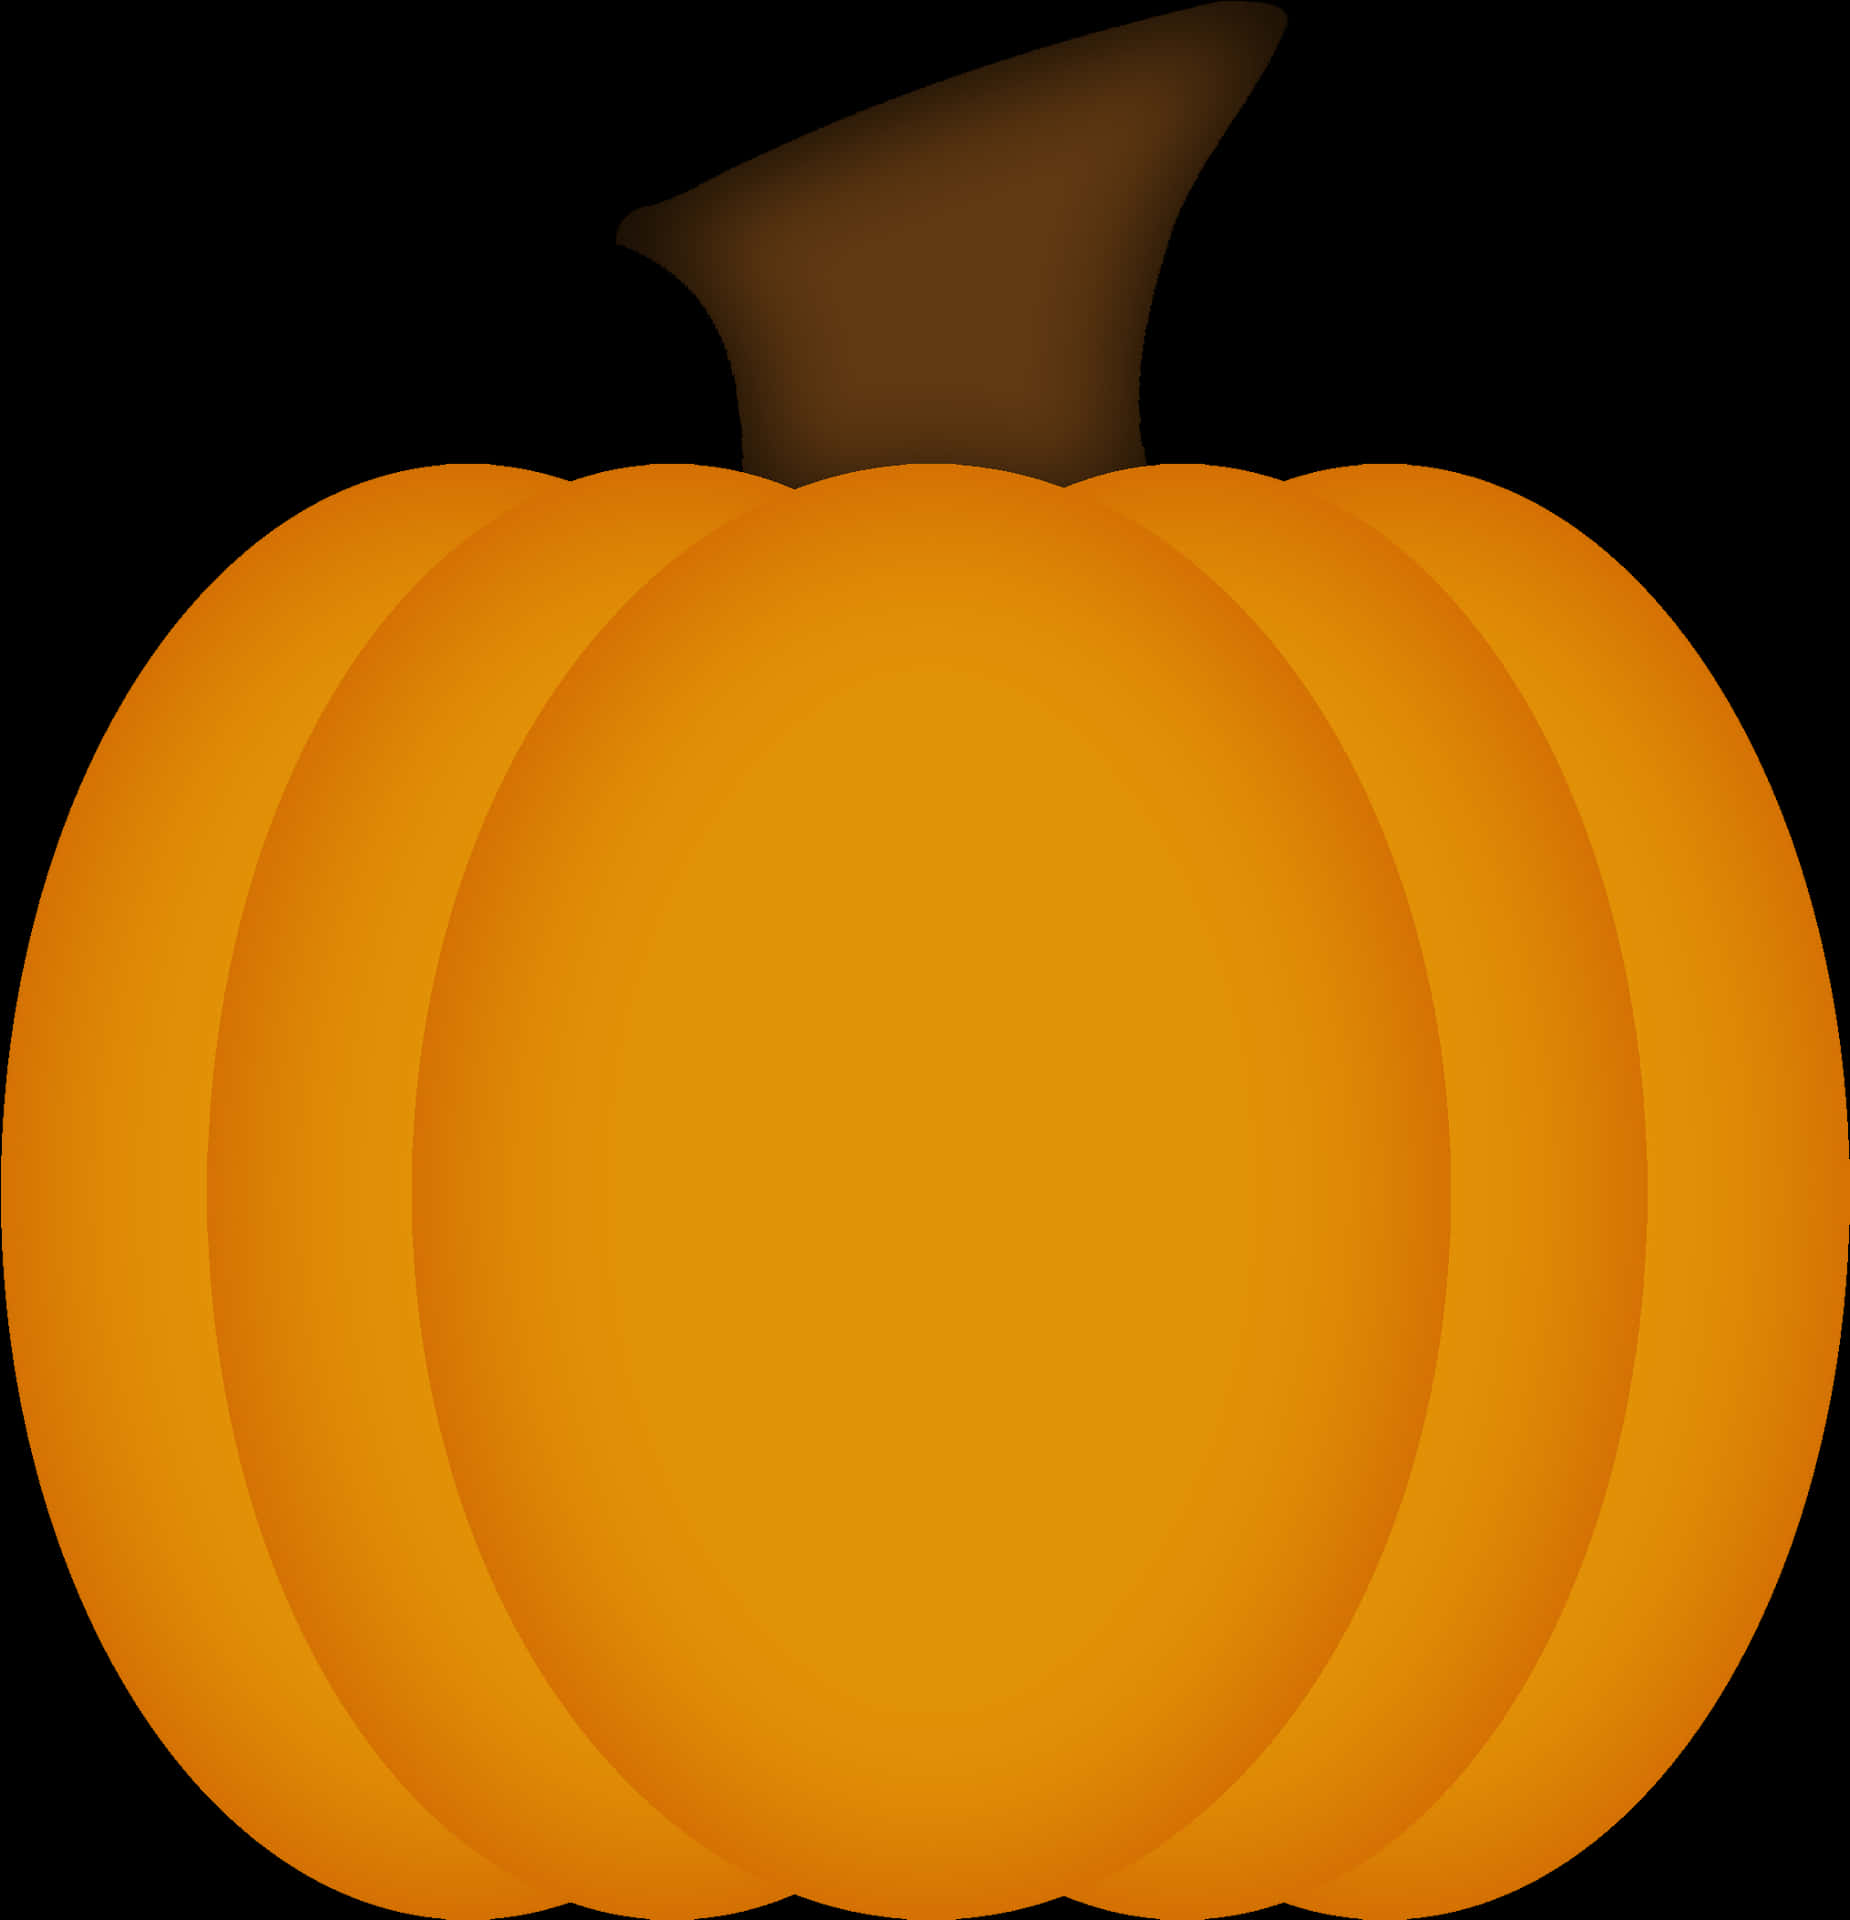 Stylized Orange Pumpkin Graphic PNG image